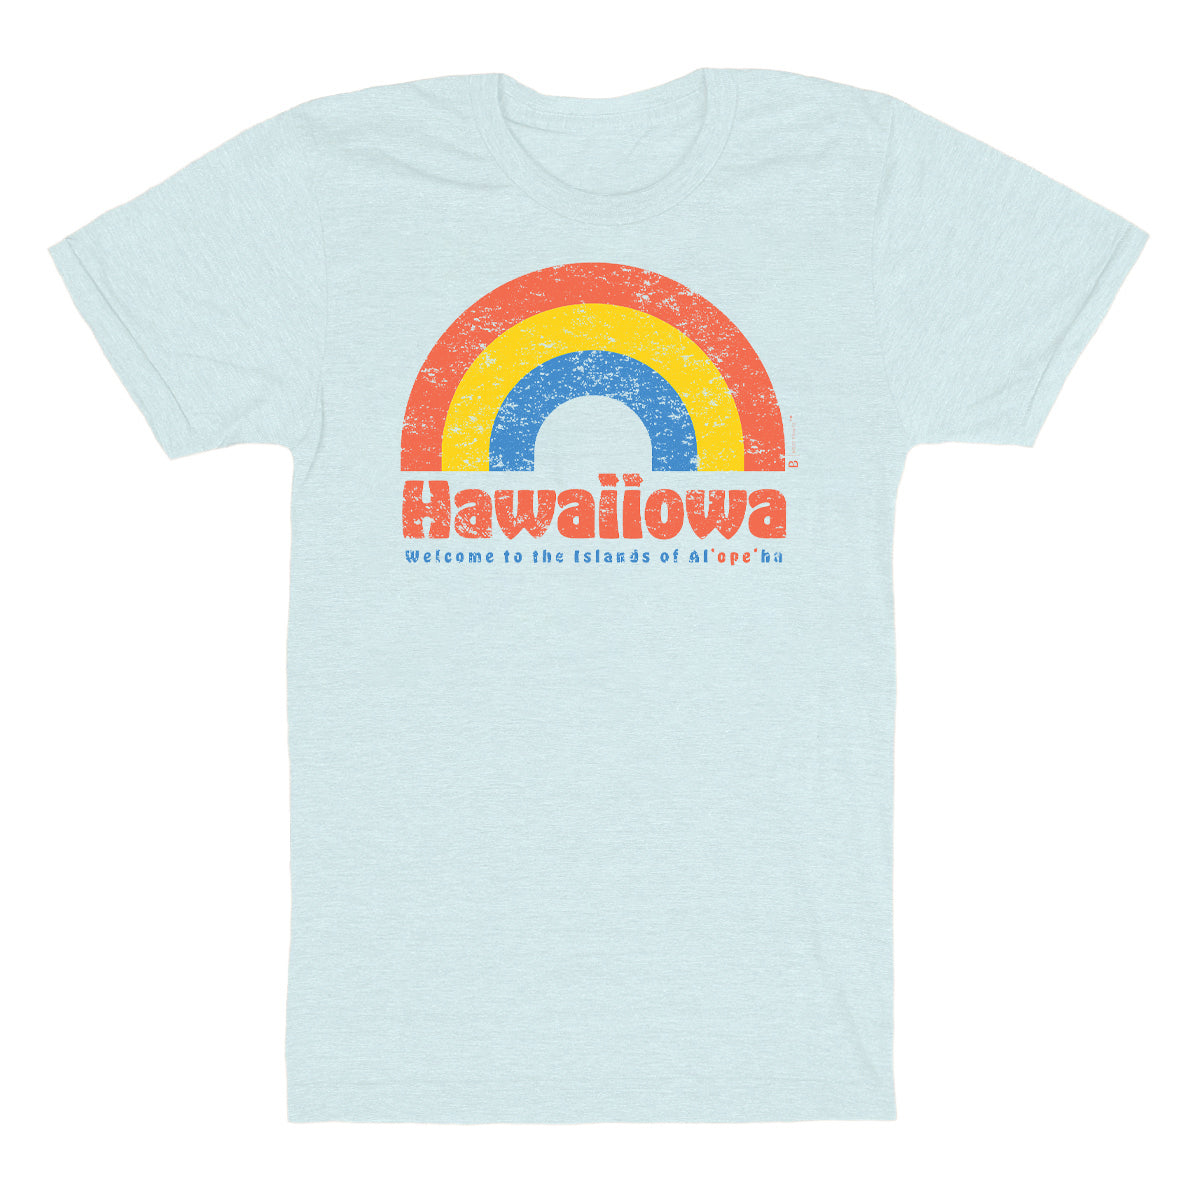 Adult Rainbow Chicago shirt